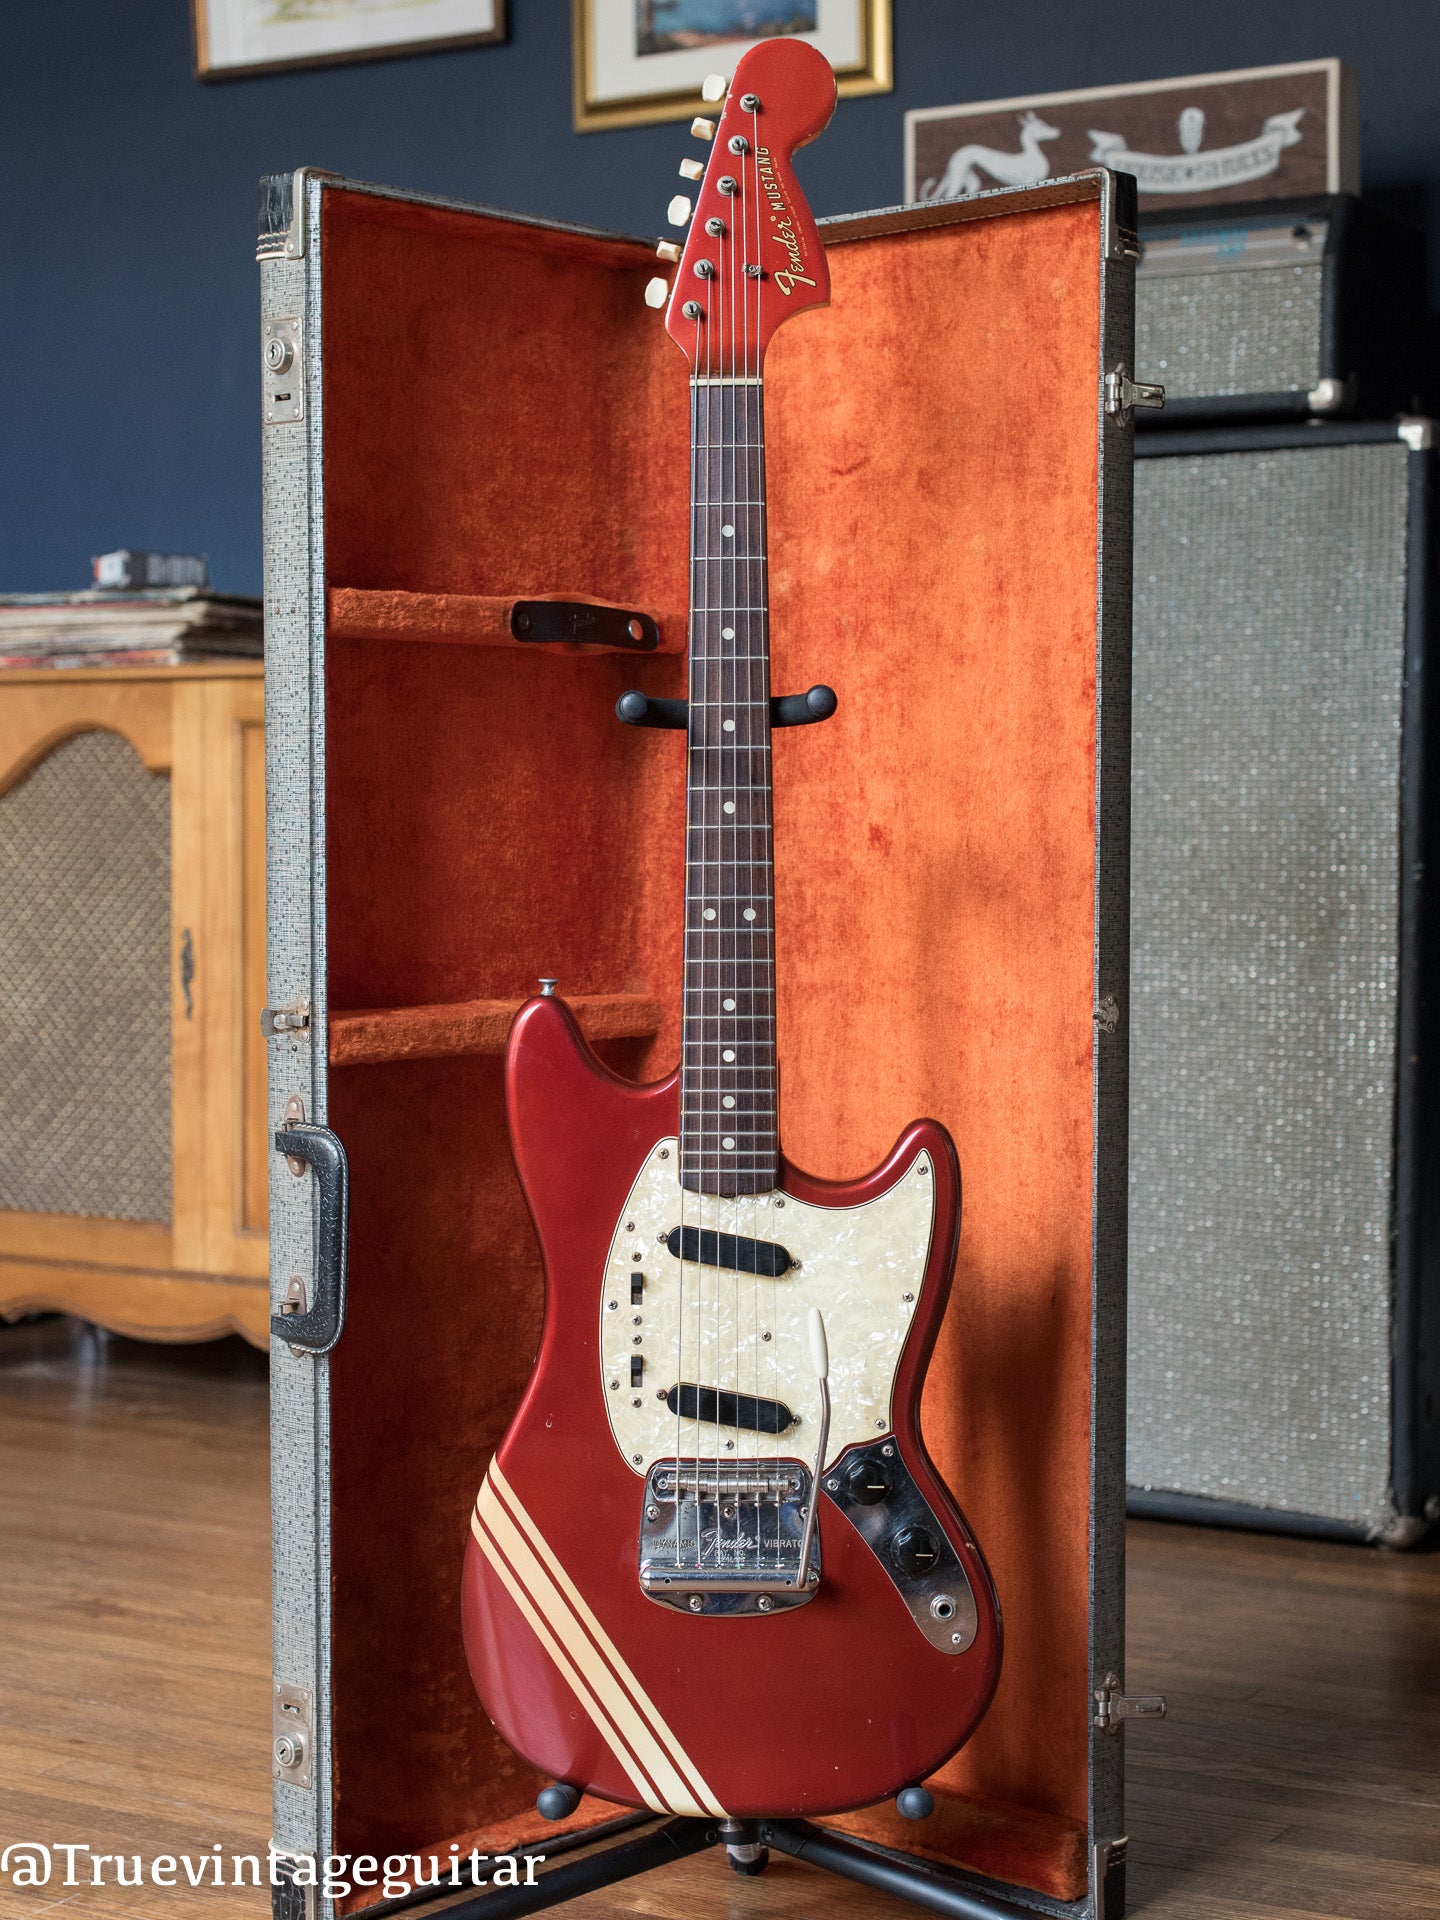 Vintage Fender Mustang guitar red white stripes 1969